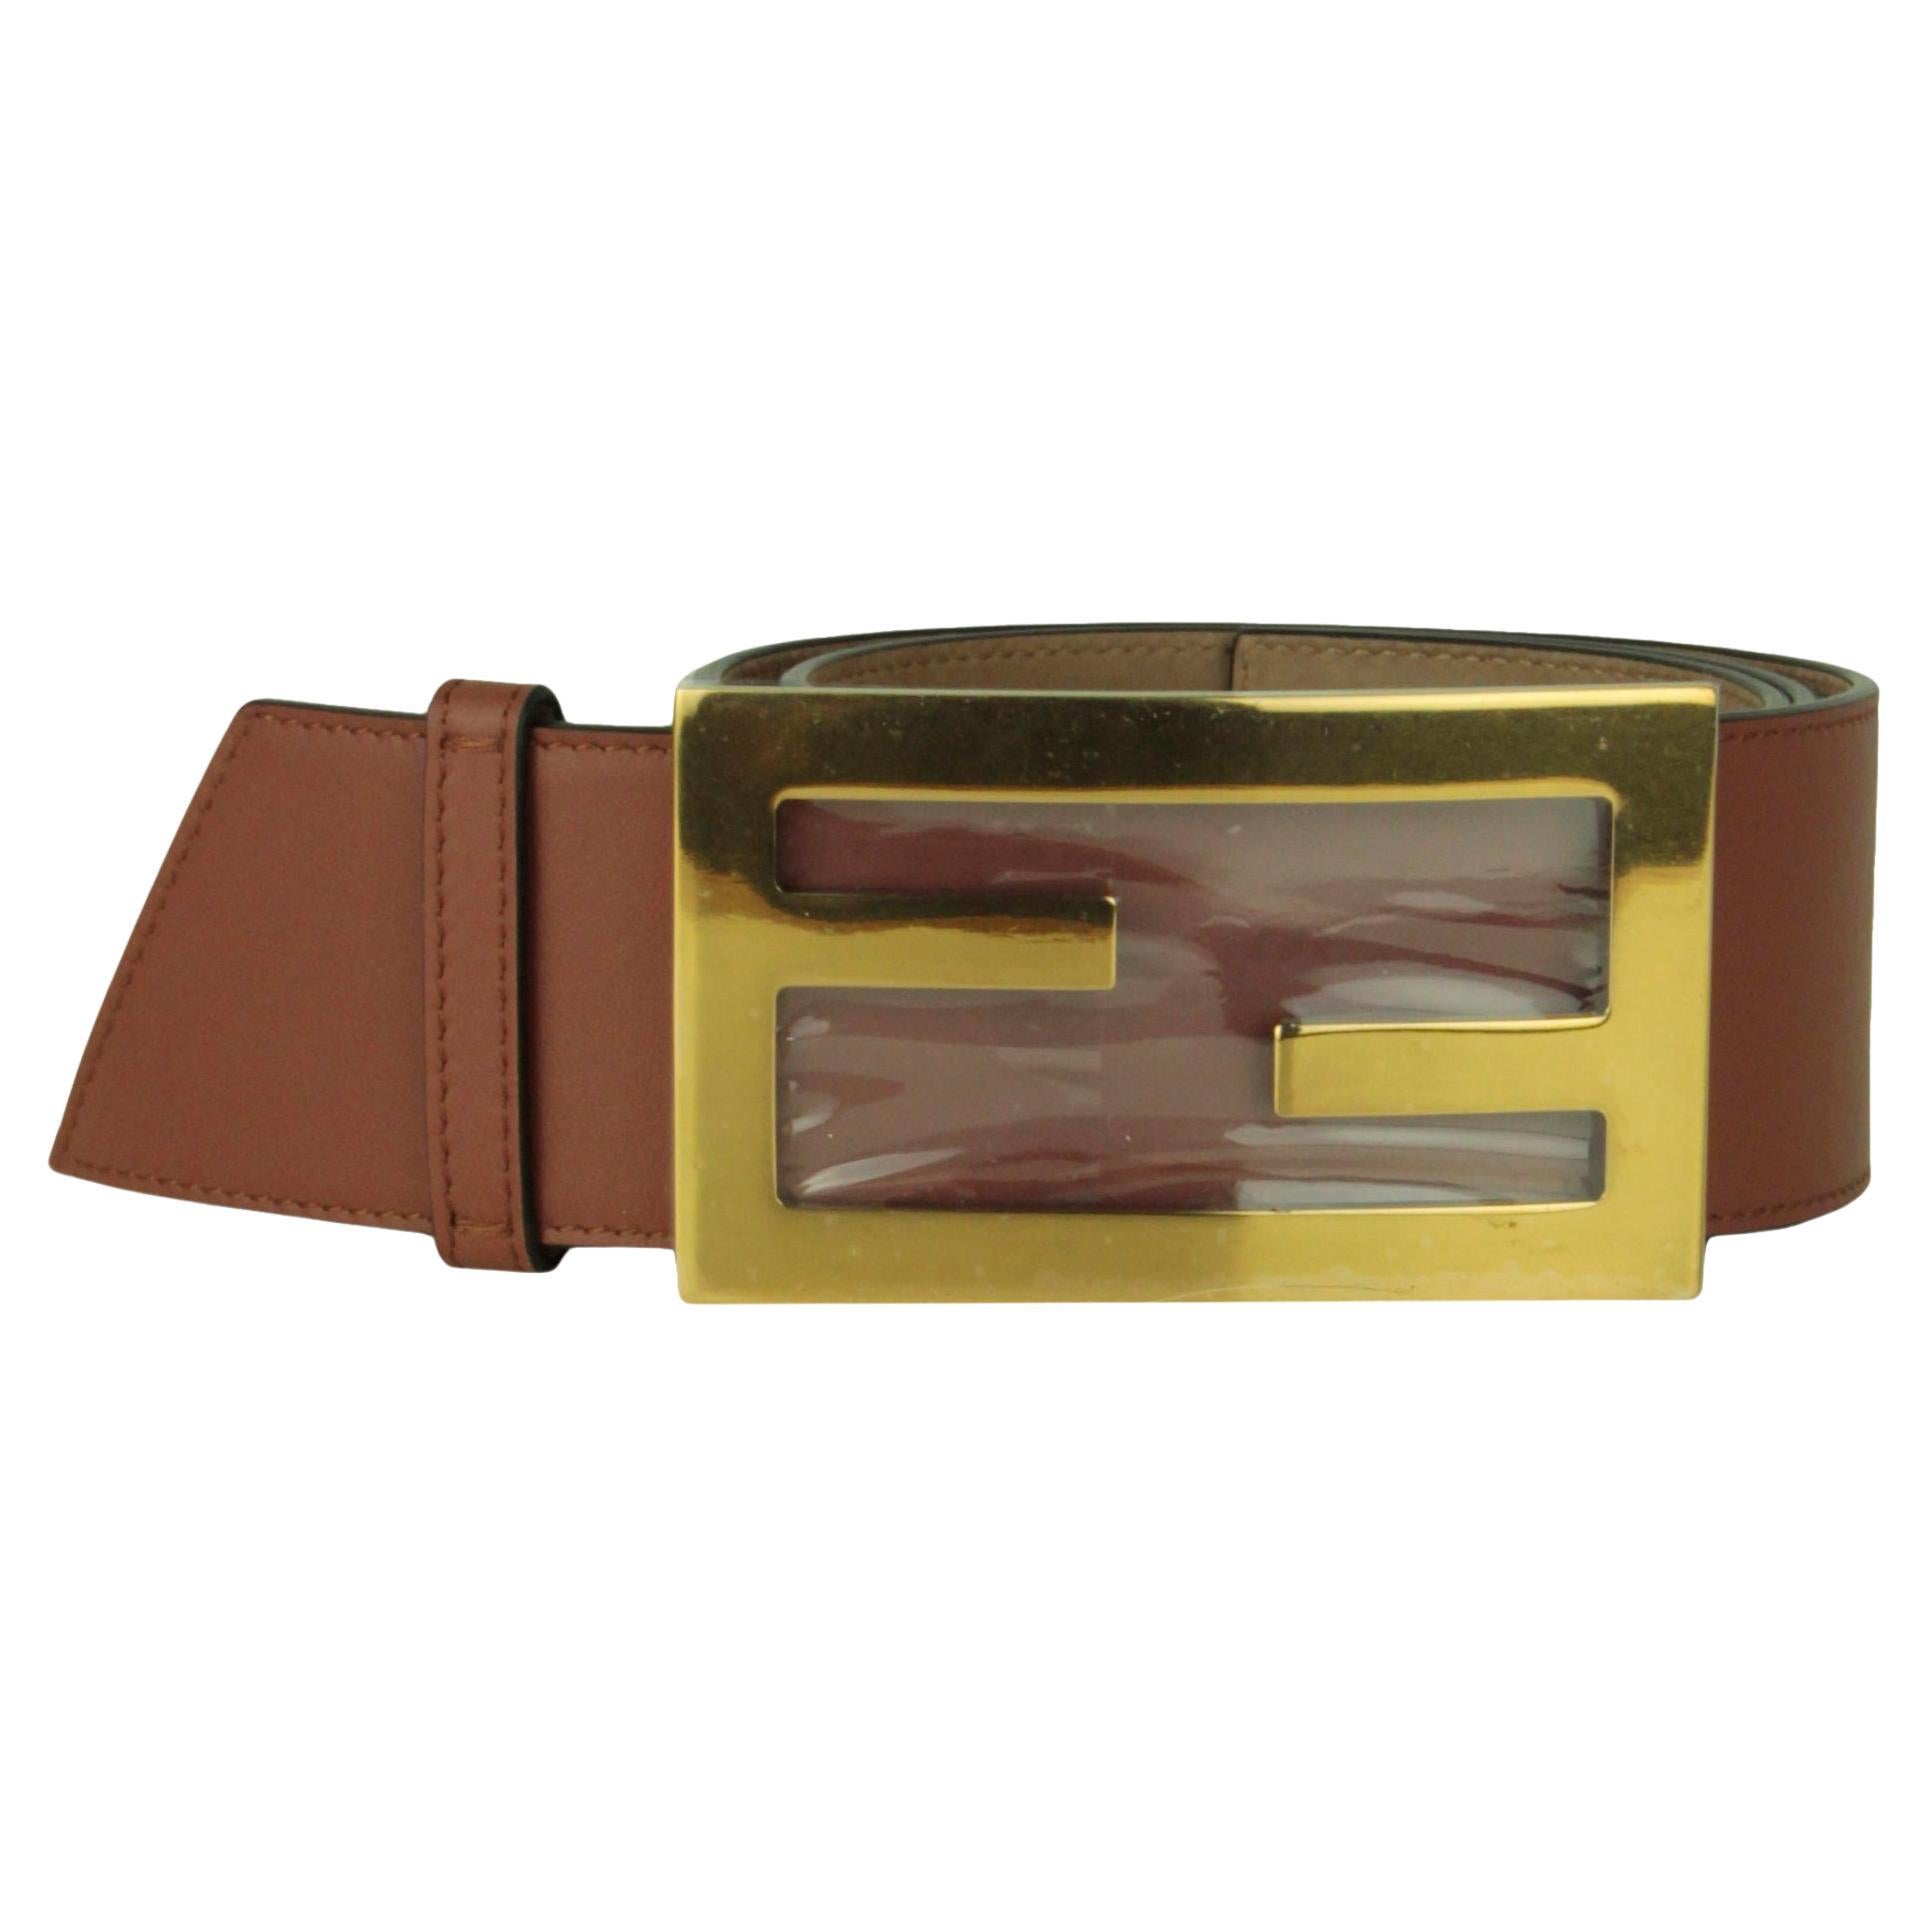 Fendi belt discount 58% WOMEN FASHION Accessories Belt Brown Brown Single 